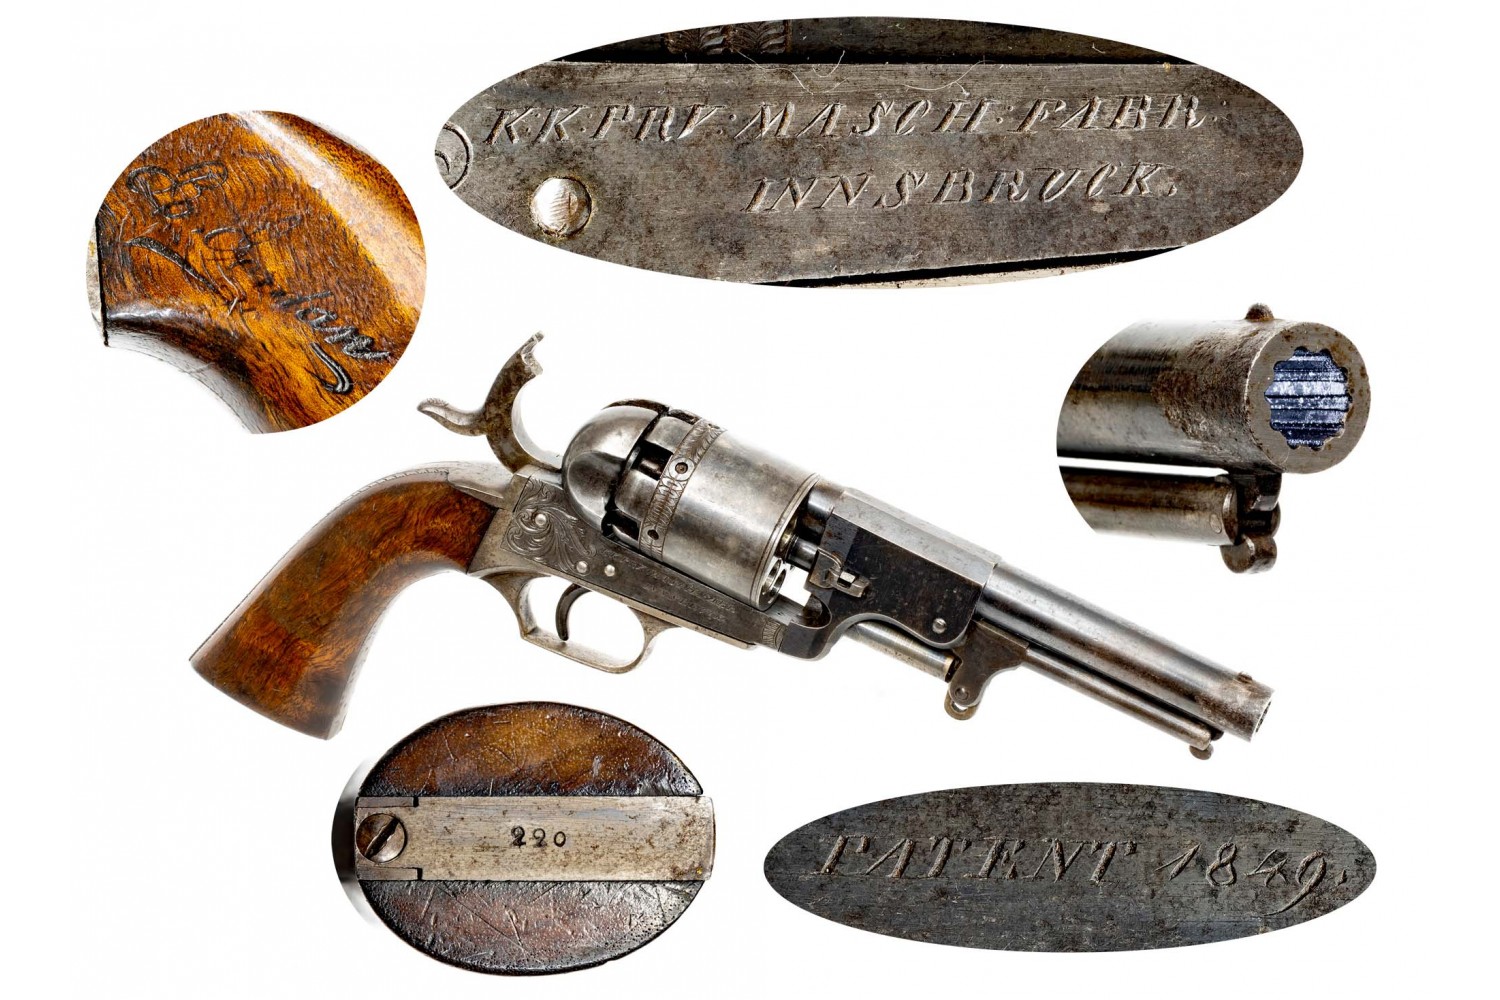 Steyr Austrian 1893 Military Test Revolver - Historic Investments